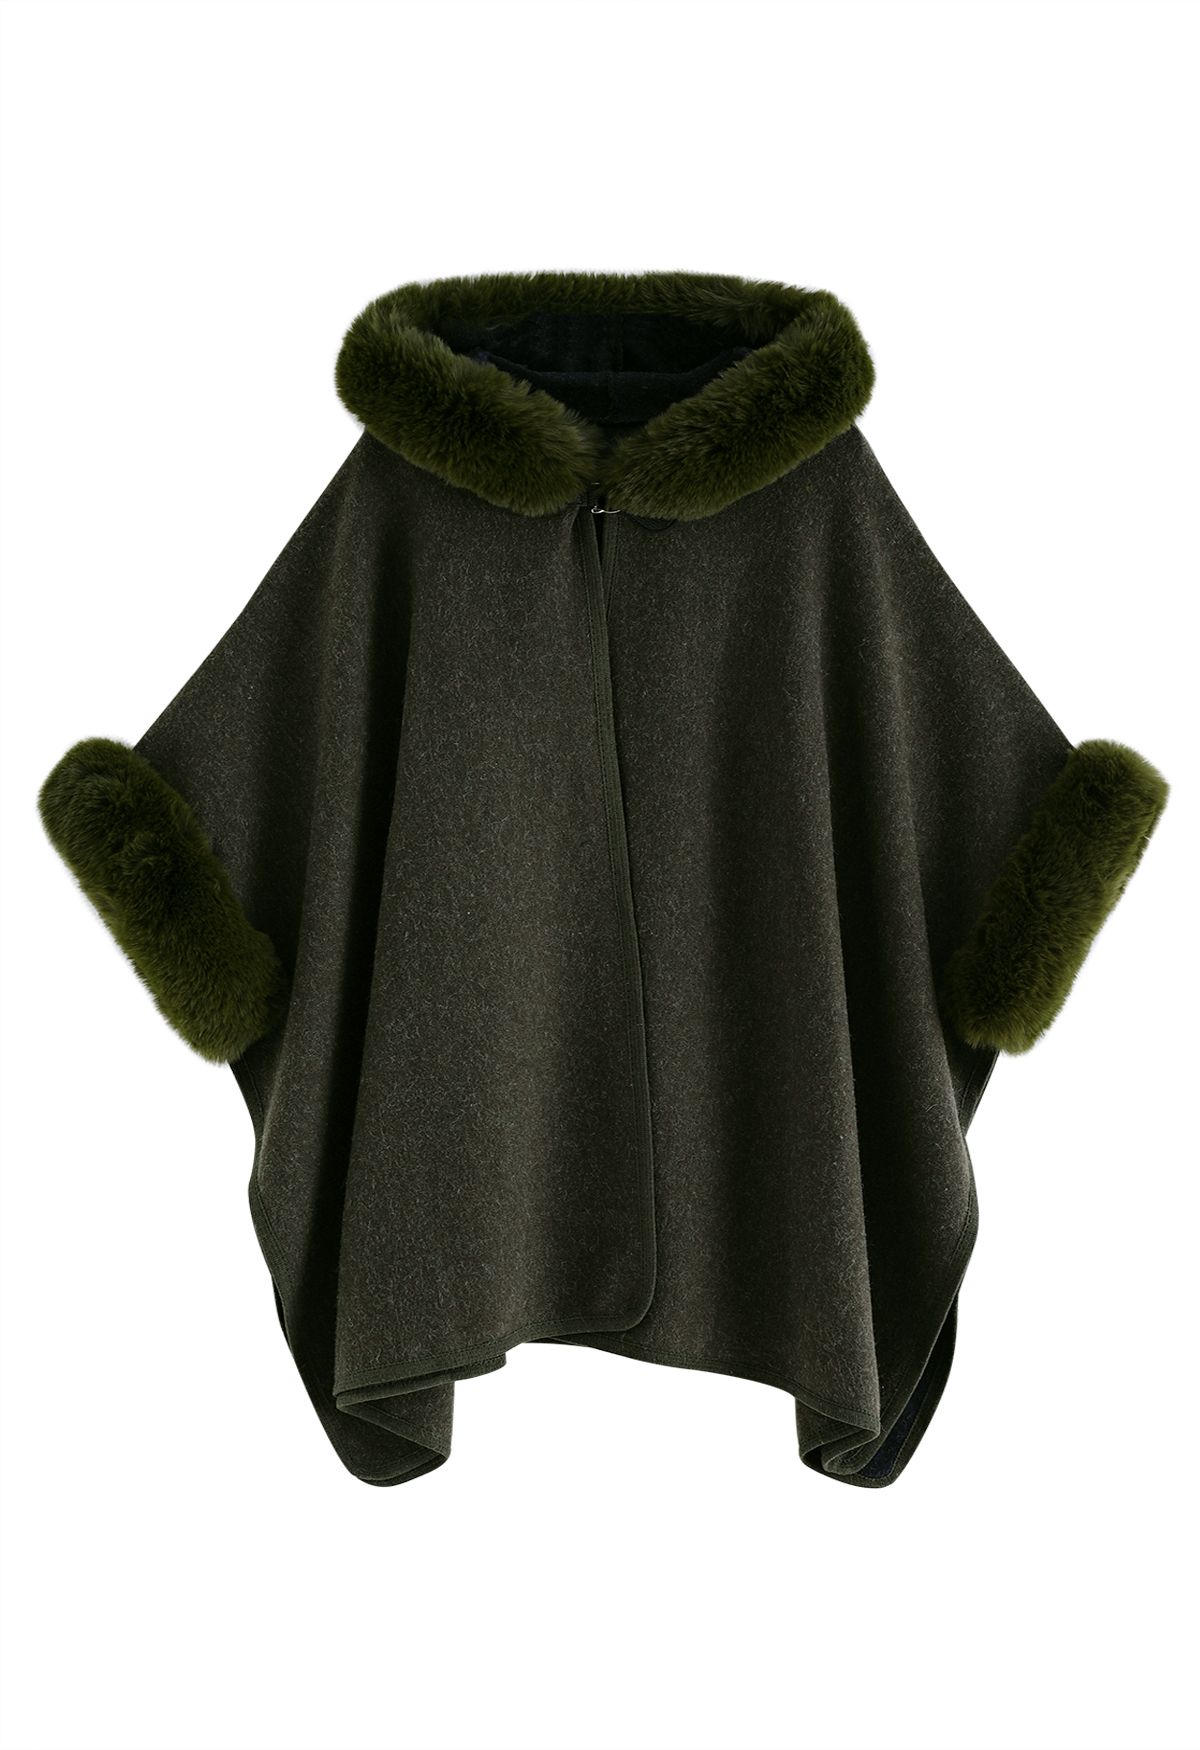 Cozy Faux Fur Hooded Poncho in Dark Green